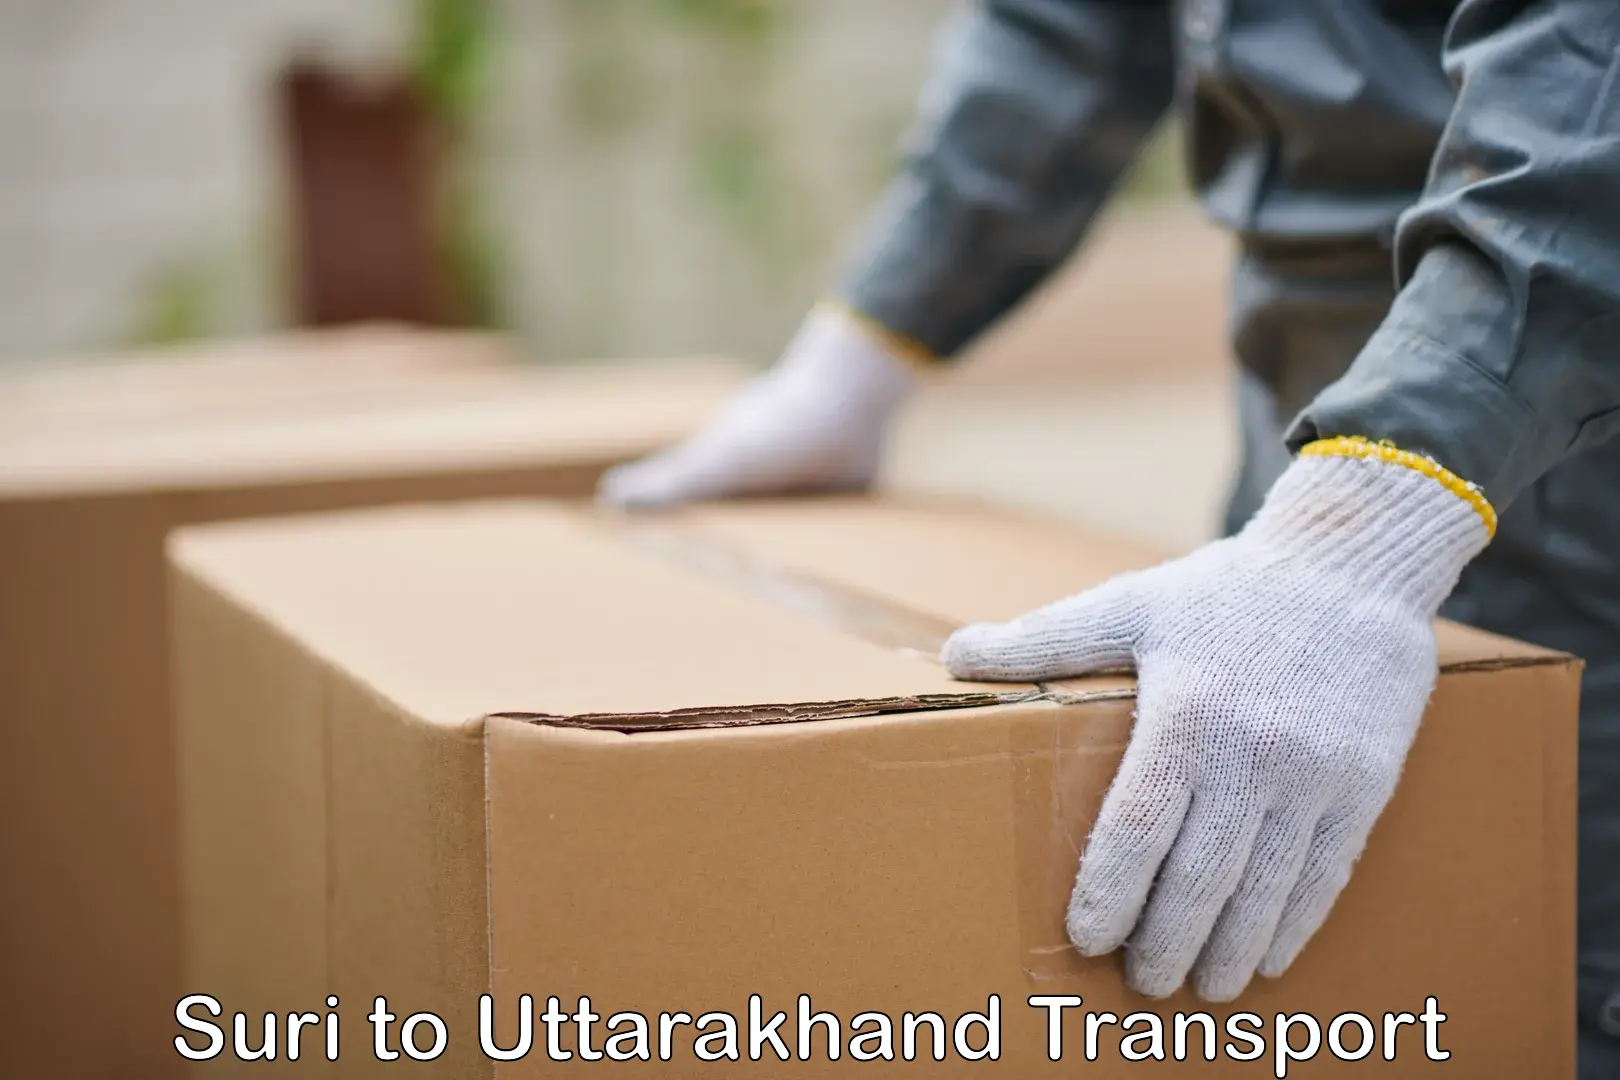 Truck transport companies in India Suri to Uttarakhand